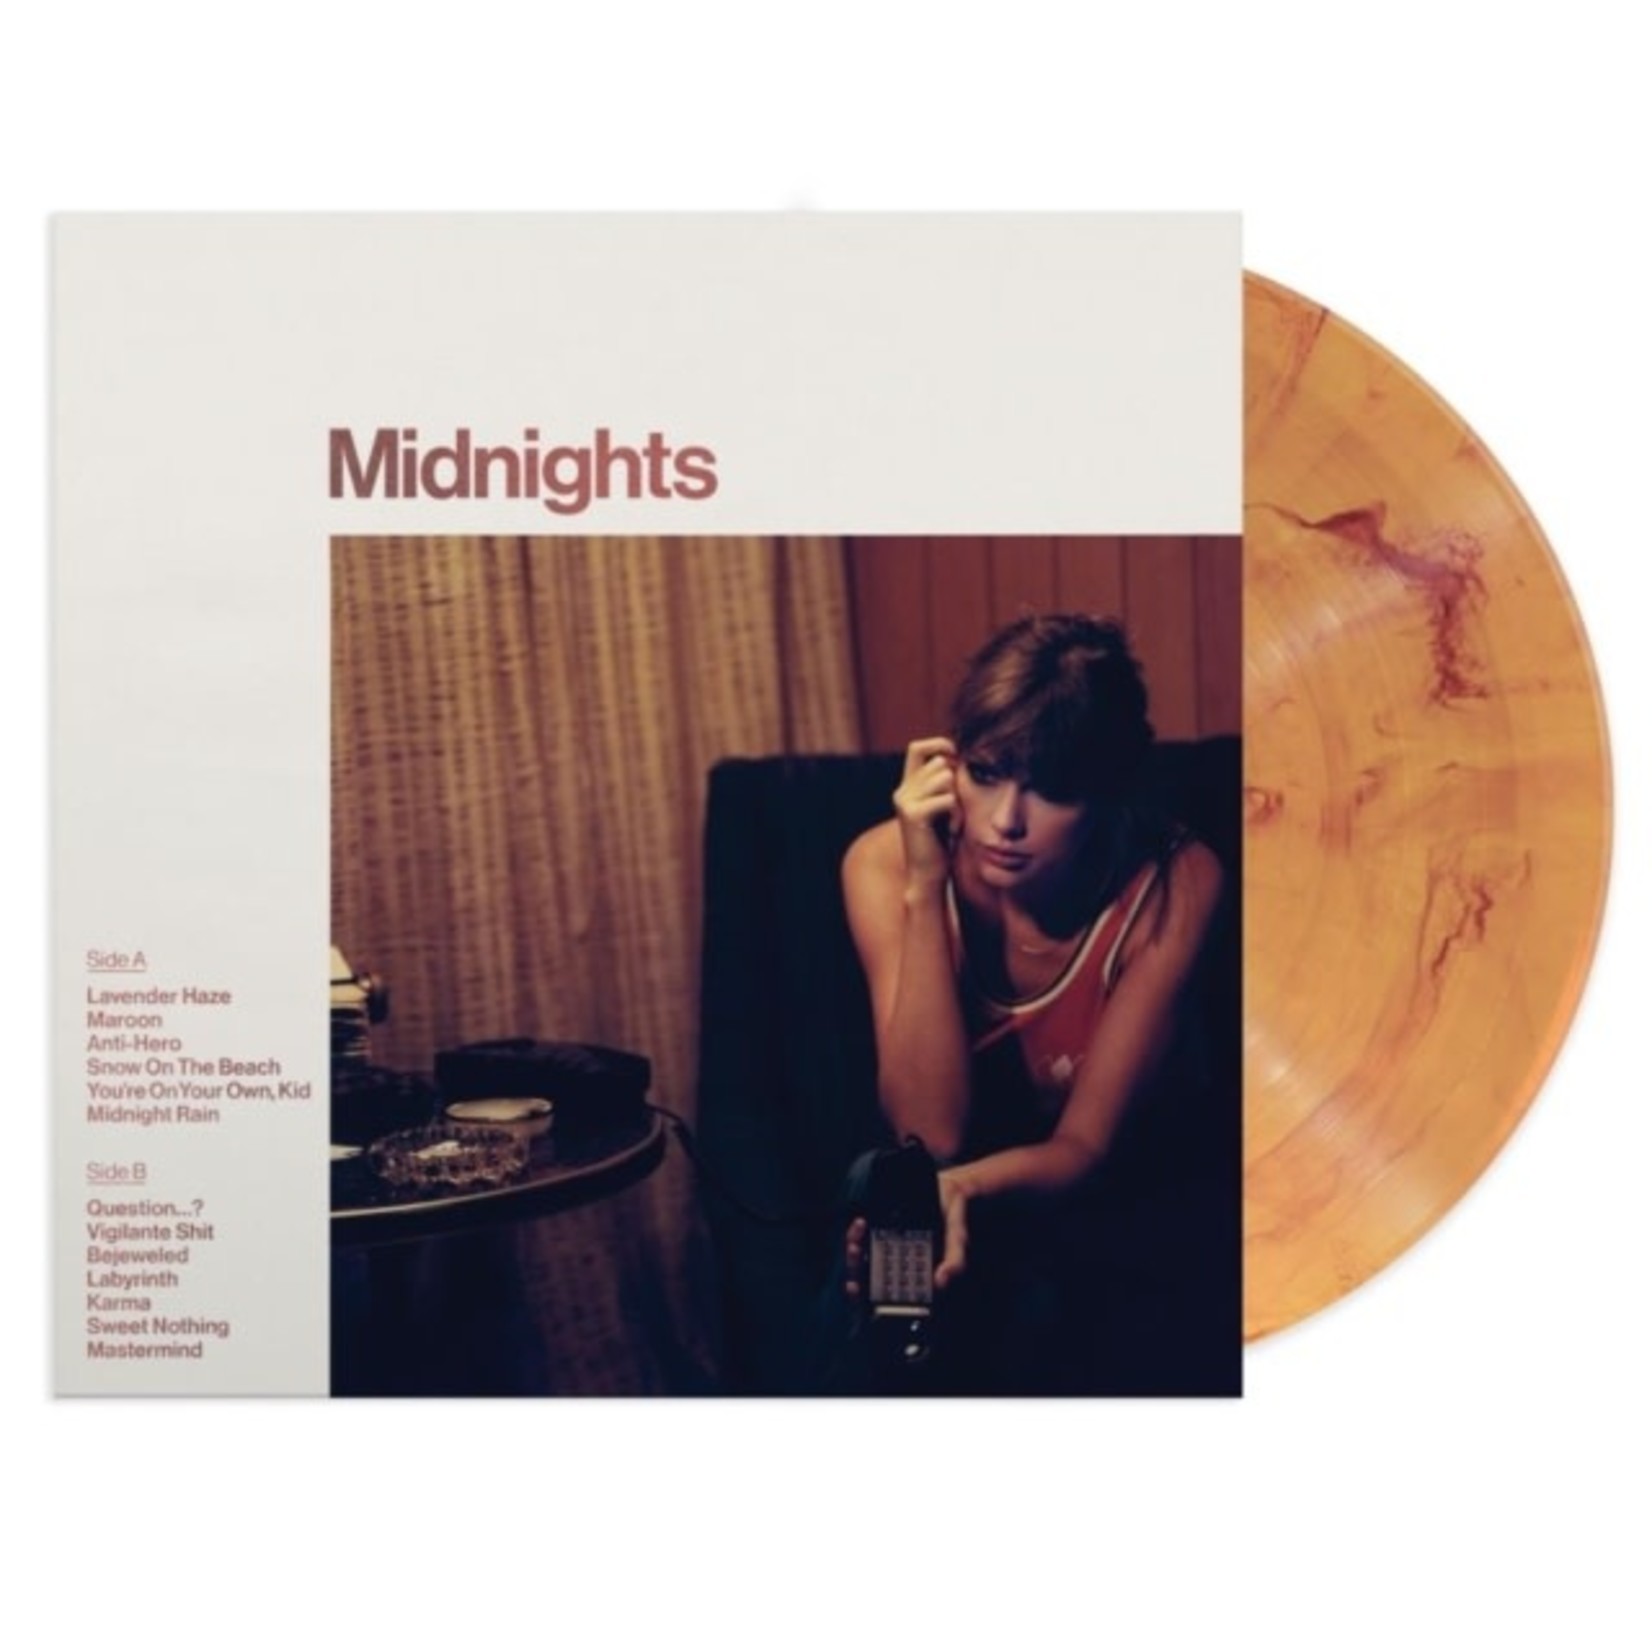 Taylor Swift - Midnights (Blood Moon Orange Ed) [LP]